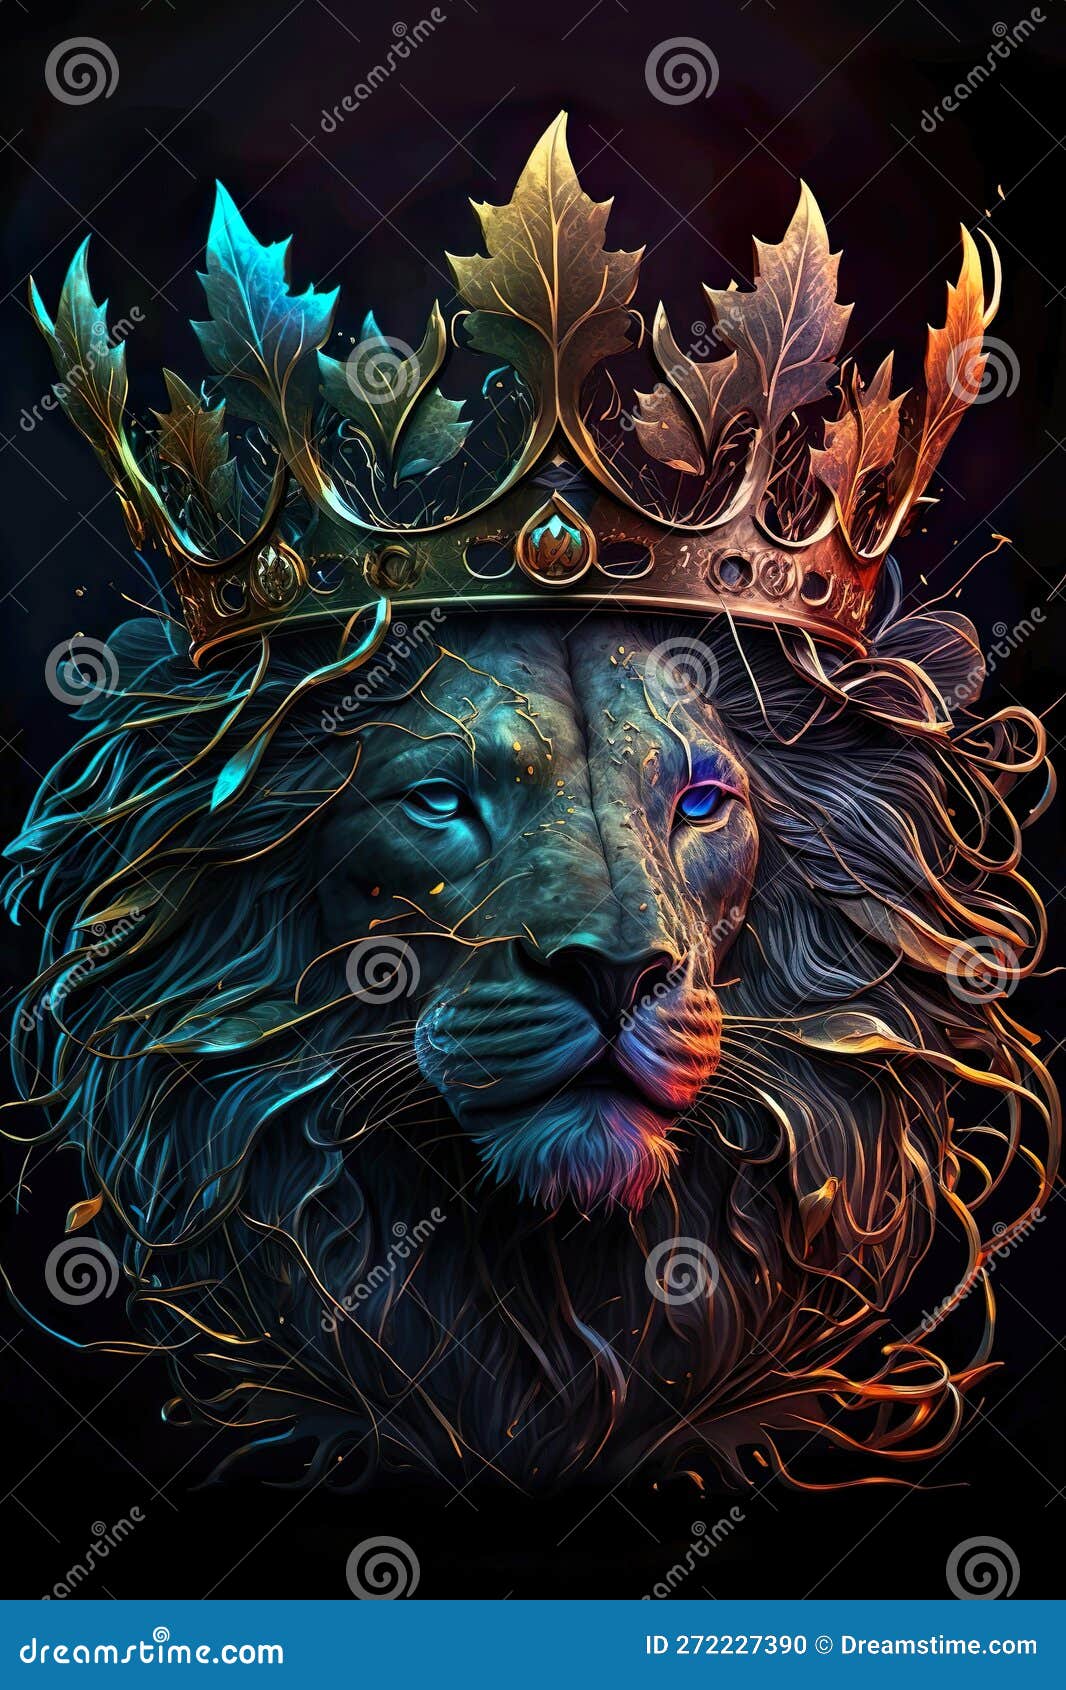 Premium AI Image  King crown illustration